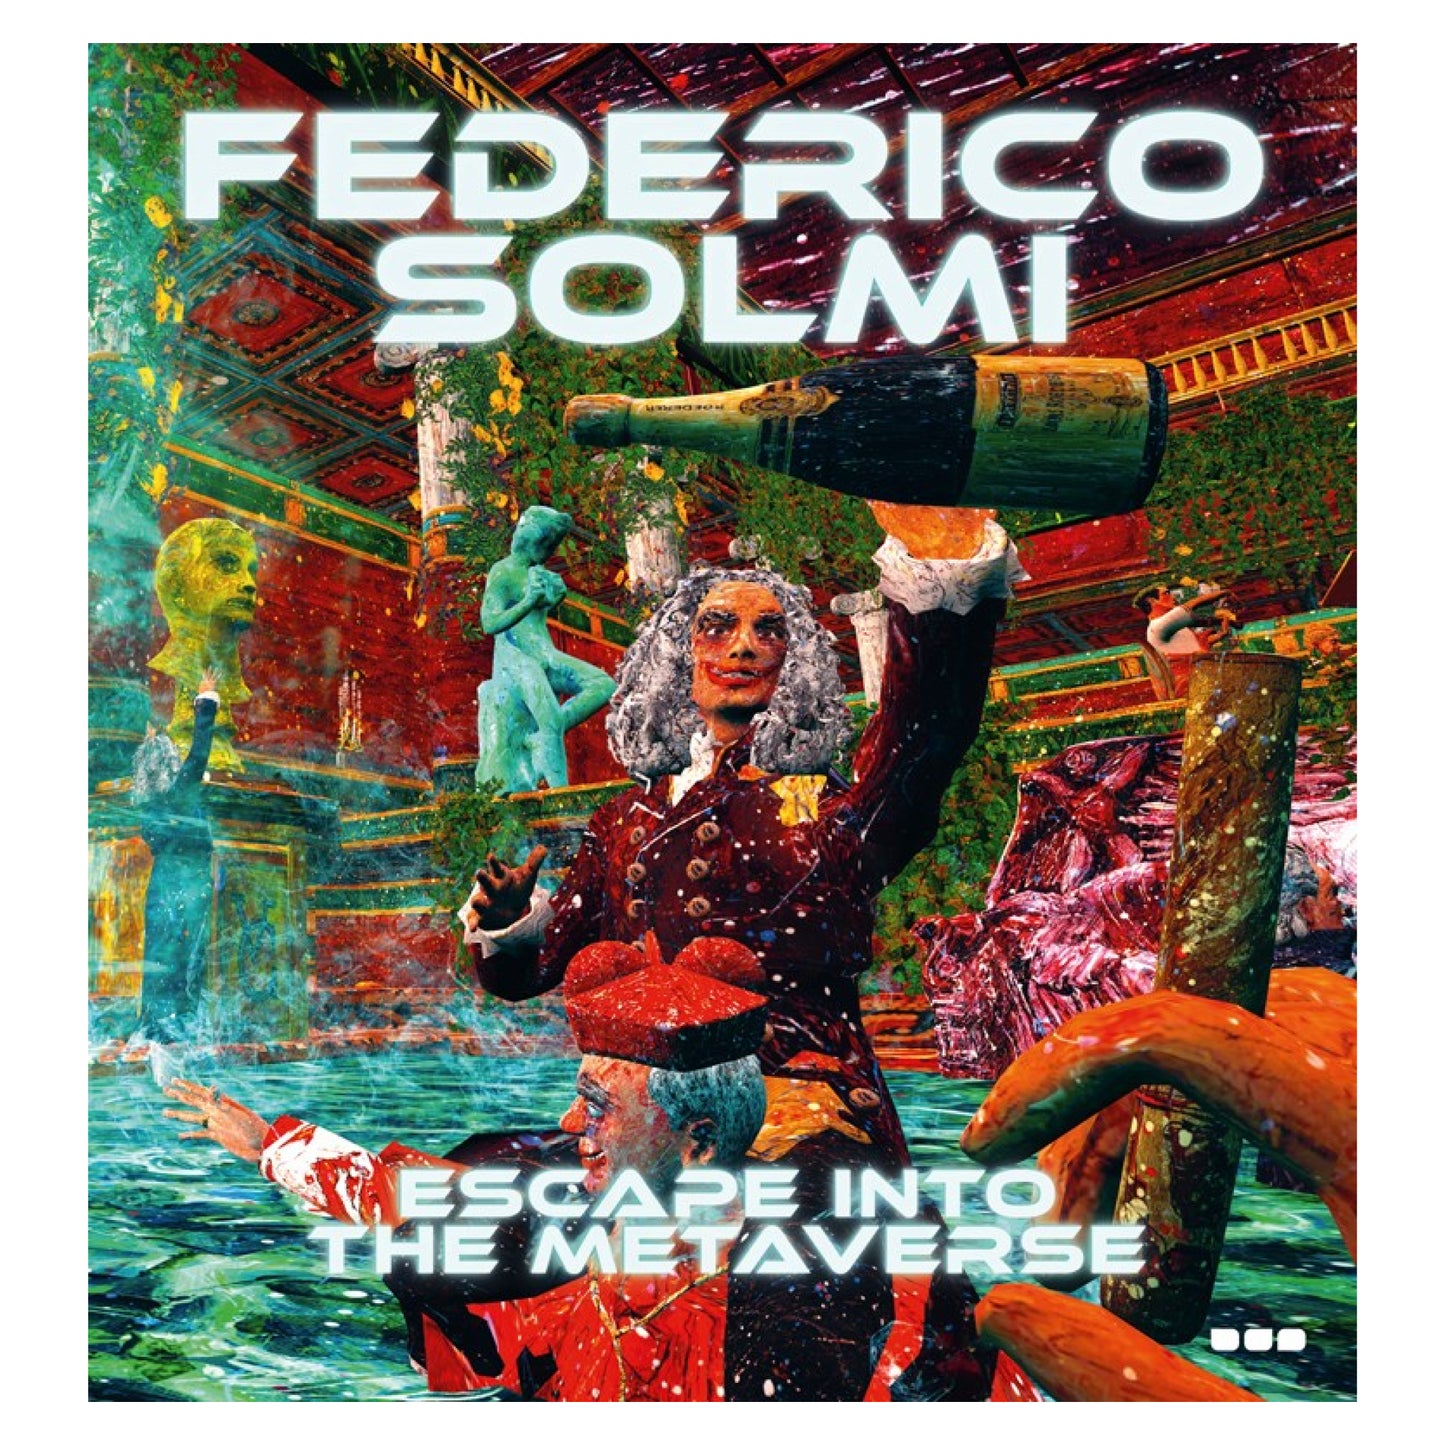 Federico Solmi: Escape Into The Metaverse